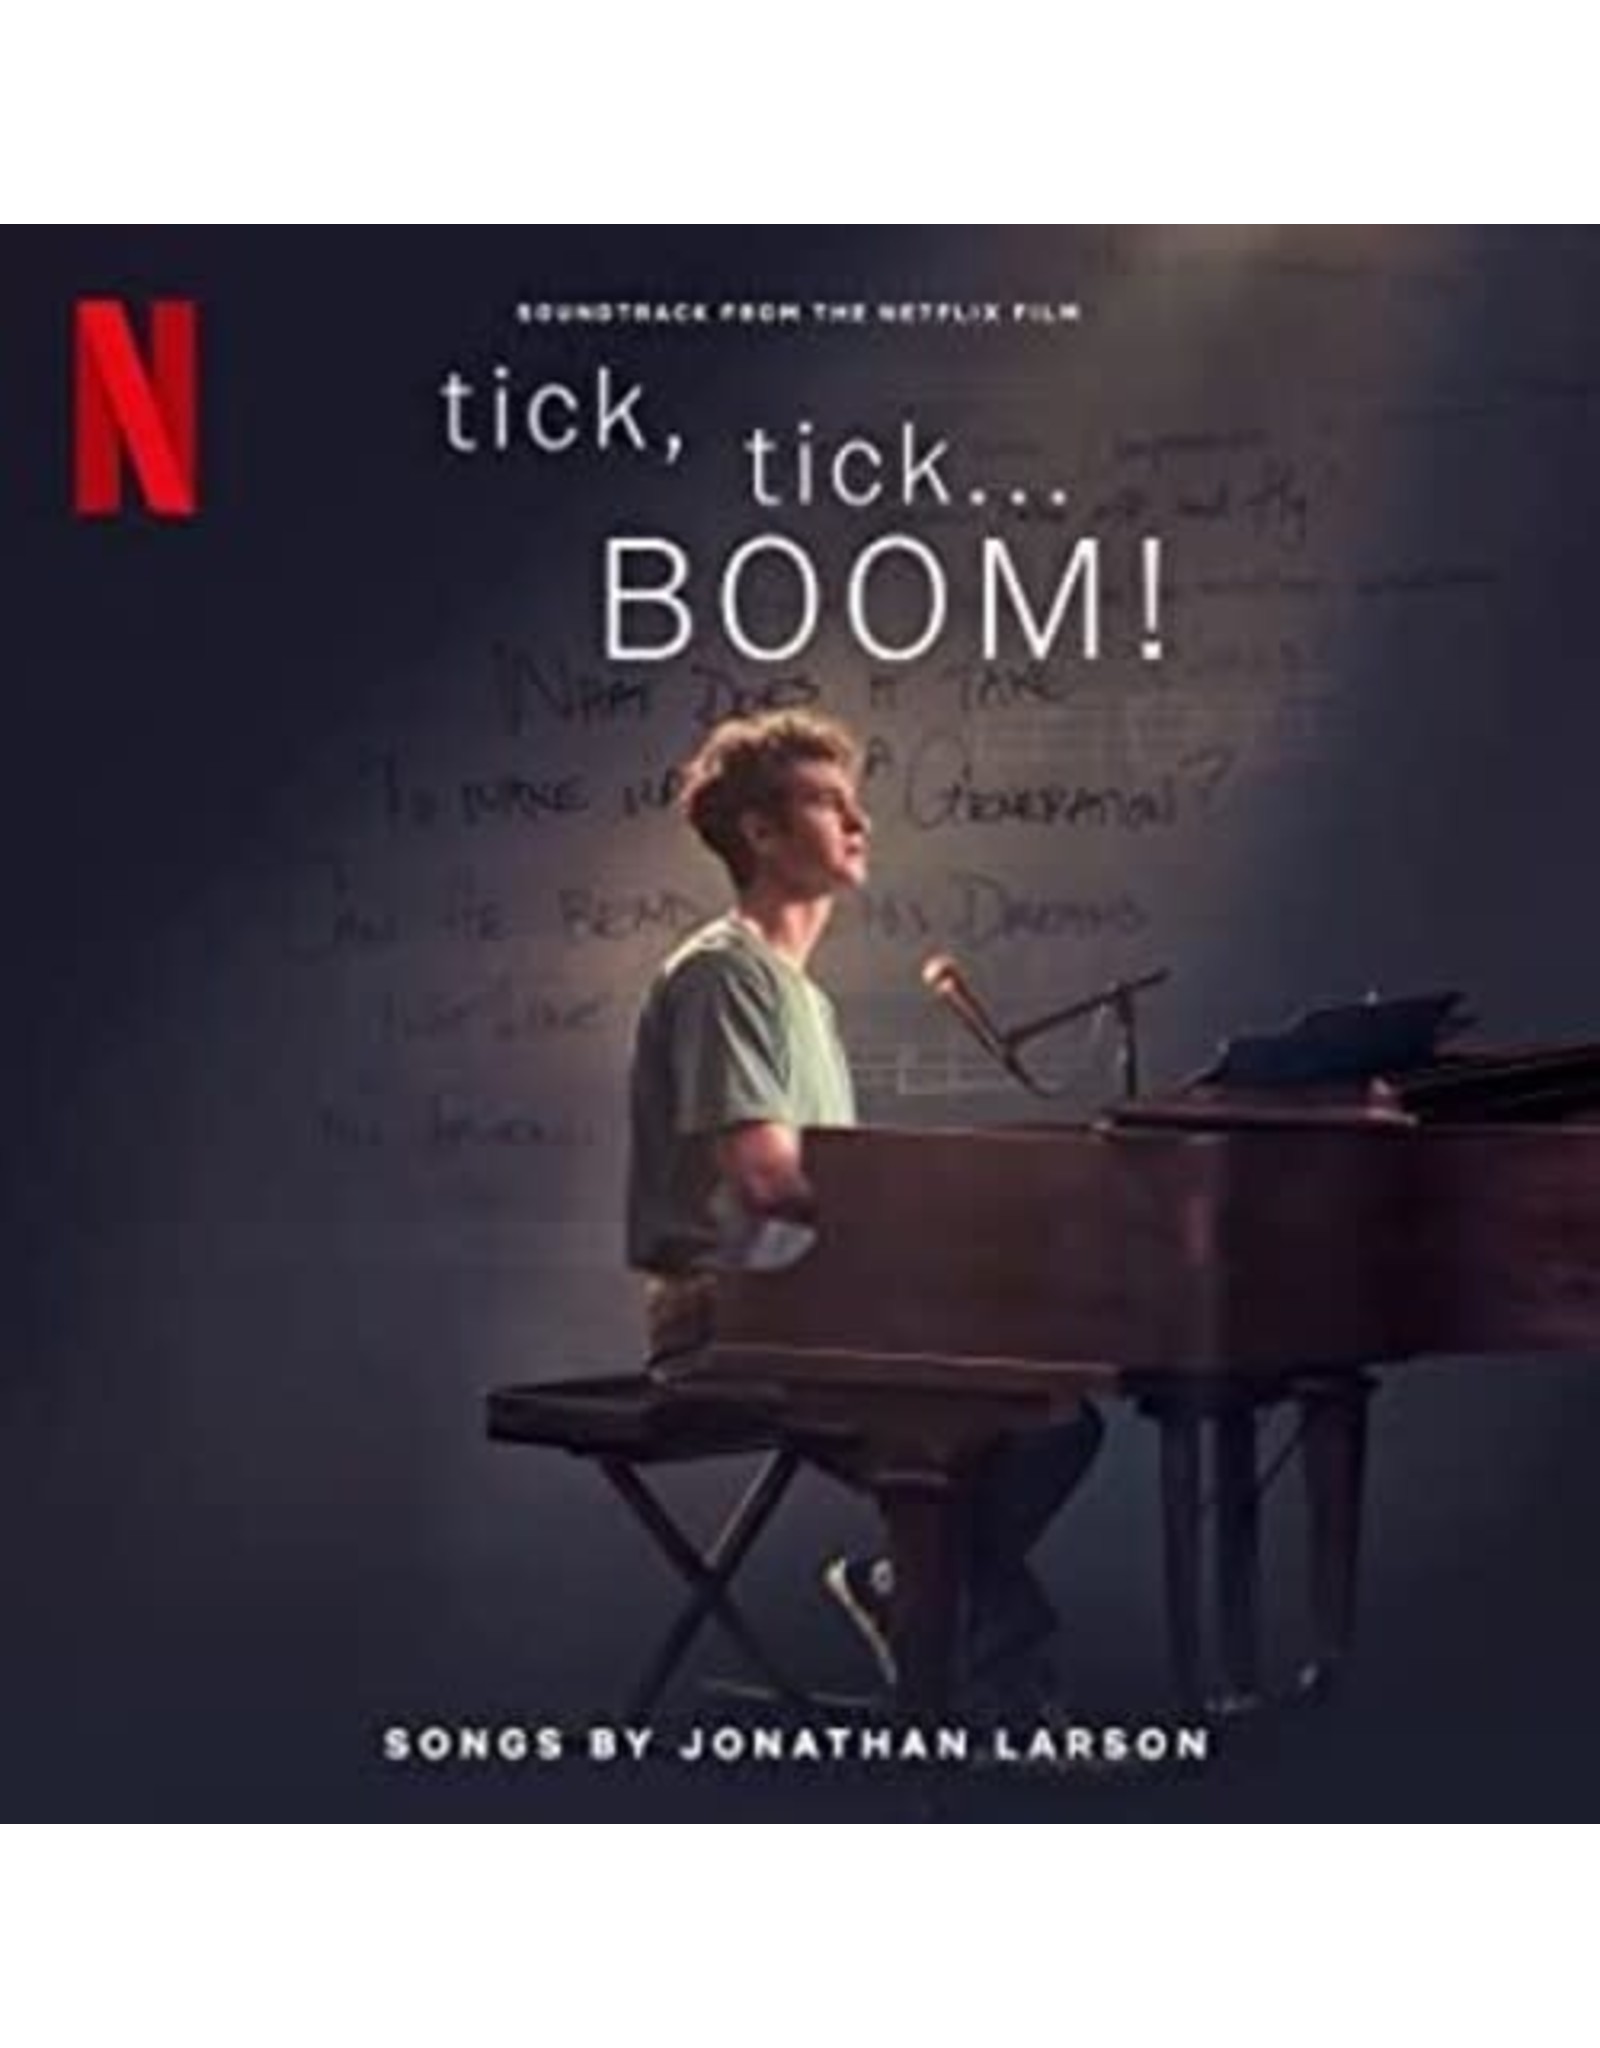 New Vinyl tick, tick... BOOM! (Soundtrack from the Netflix Film) 2LP